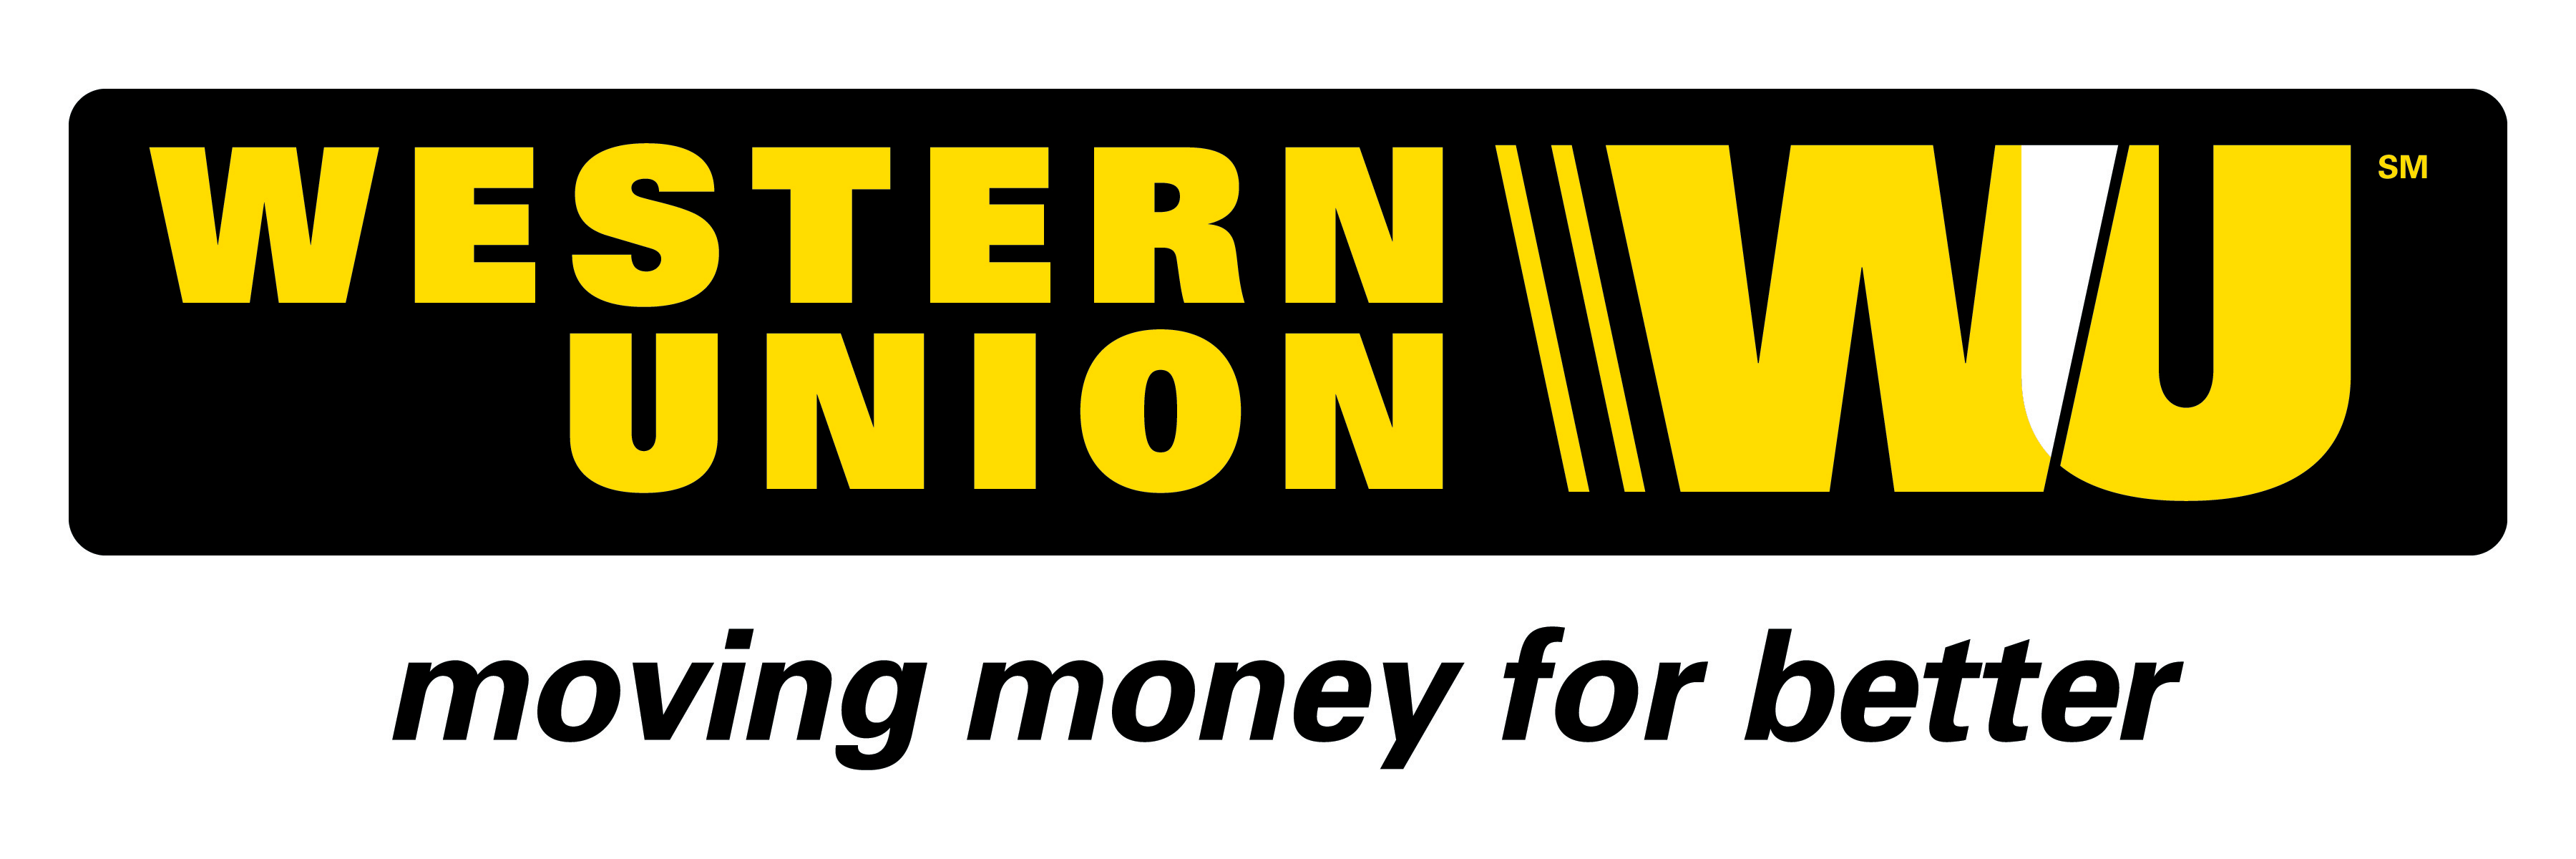 Western Union Logo PNG - 112051